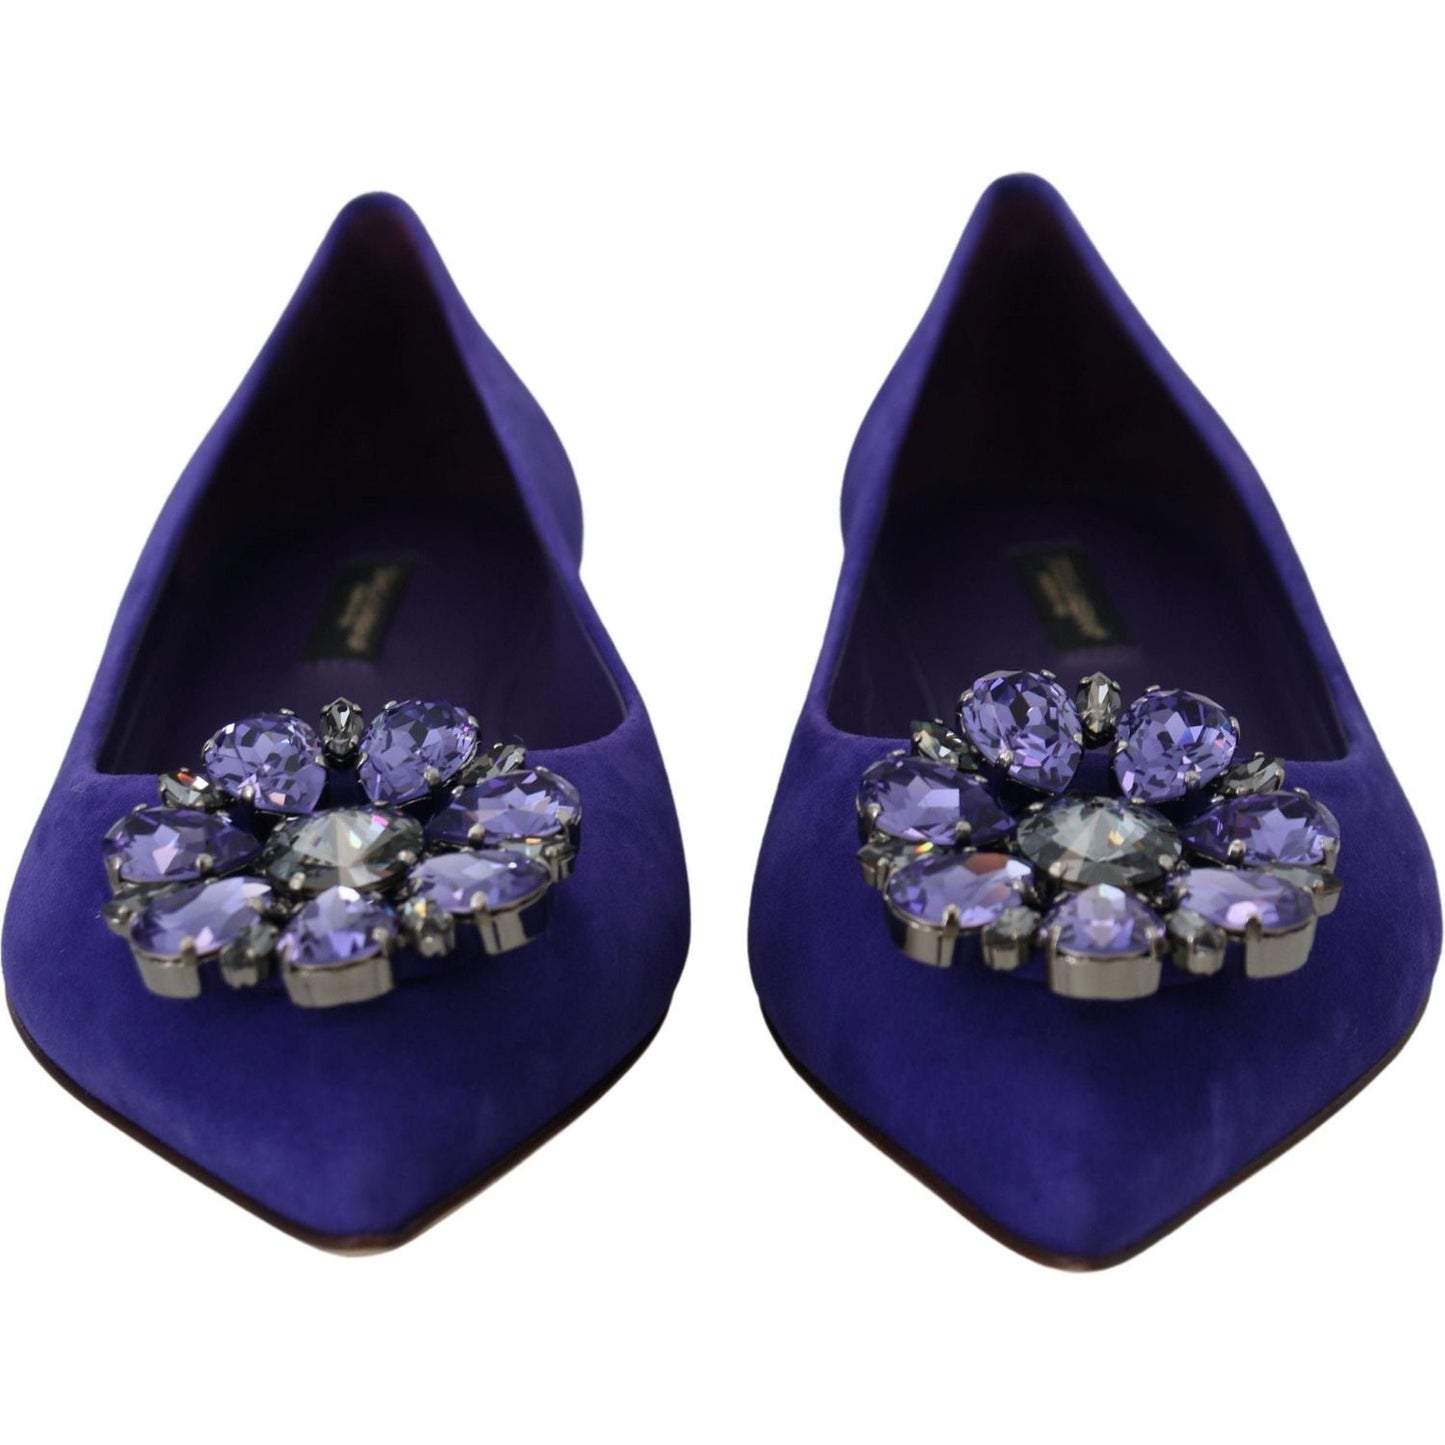 Dolce & Gabbana Embellished Crystal Purple Suede Flats purple-suede-crystals-loafers-flats-shoes IMG_8914-450003b6-7ed.jpg